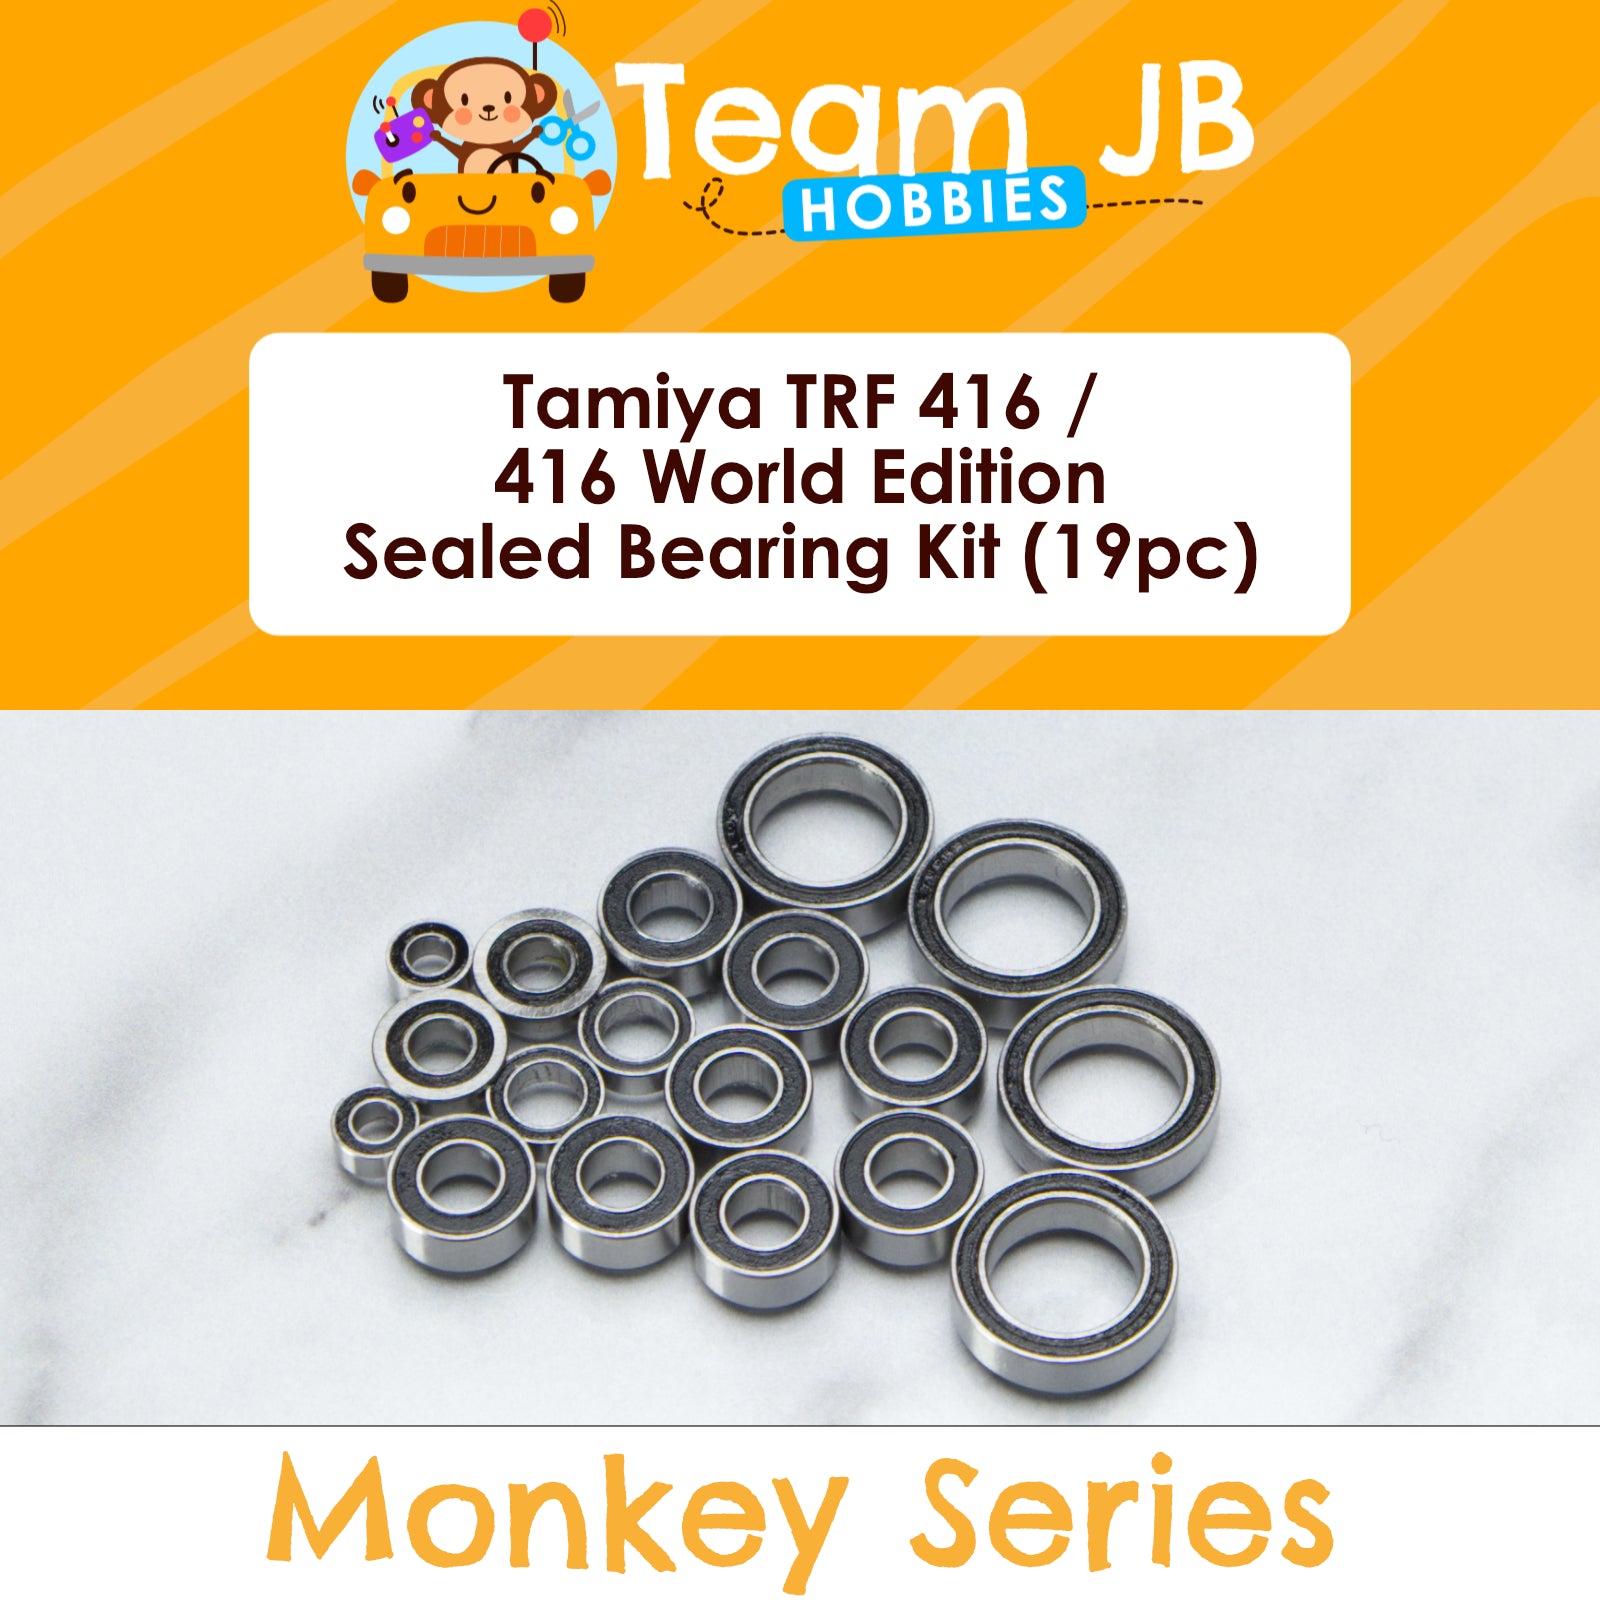 Tamiya TRF 416, TRF 416 World Edition Chassis  - Sealed Bearing Kit